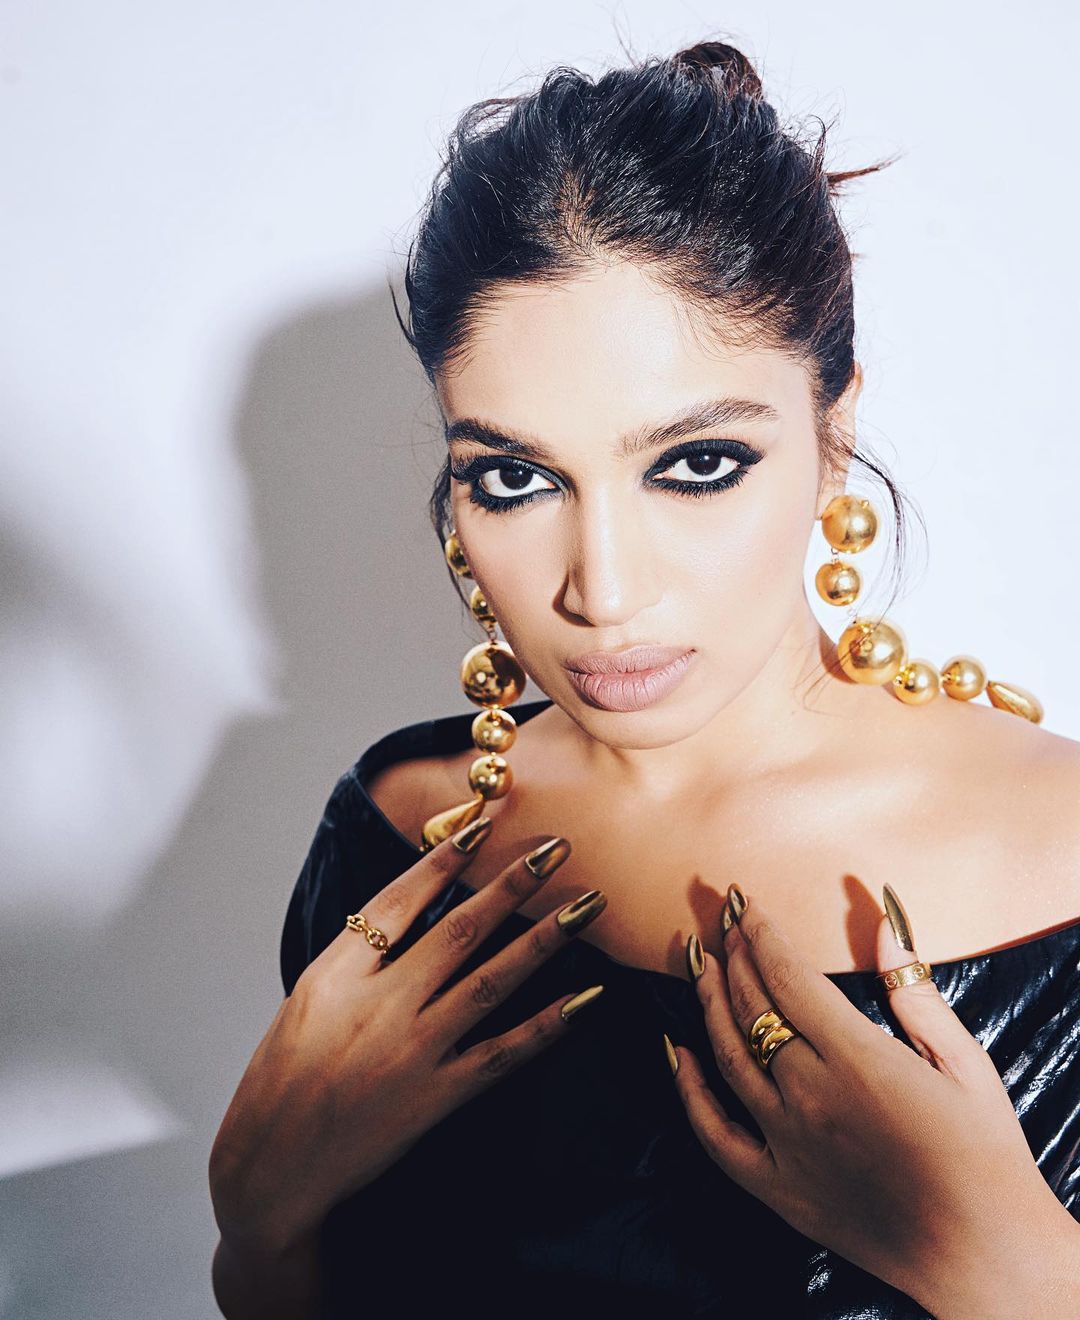 bhumi-pednekar-stuns-in-shiny-black-dress-showcasing-her-bold-fashion-choices